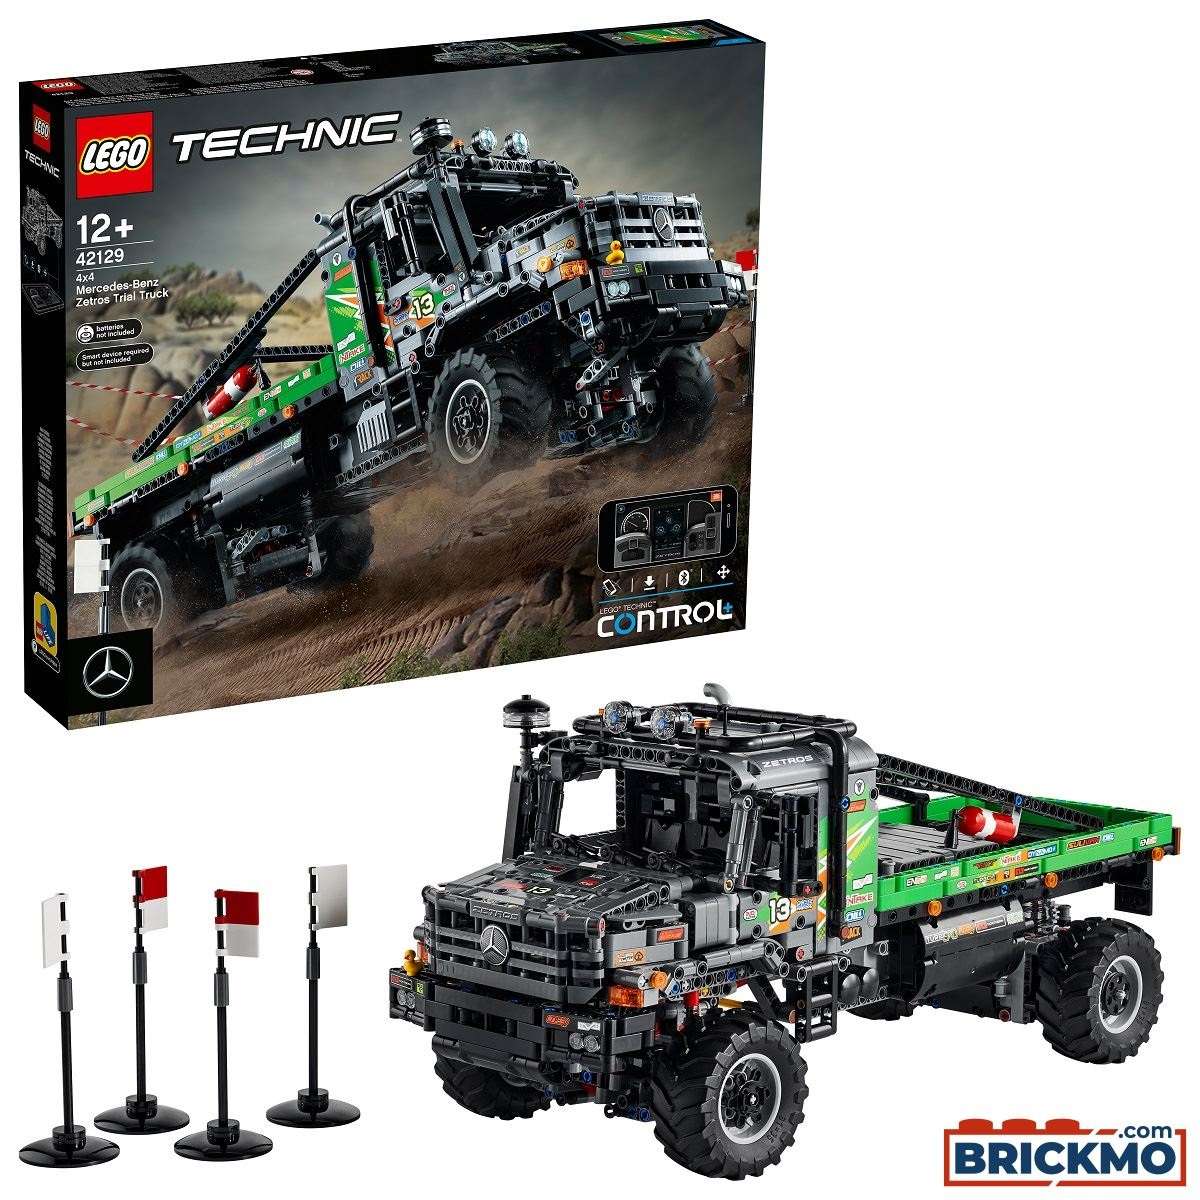 LEGO Technic 42129 4x4 Mercedes Benz Zetros Offroad-Truck 42129